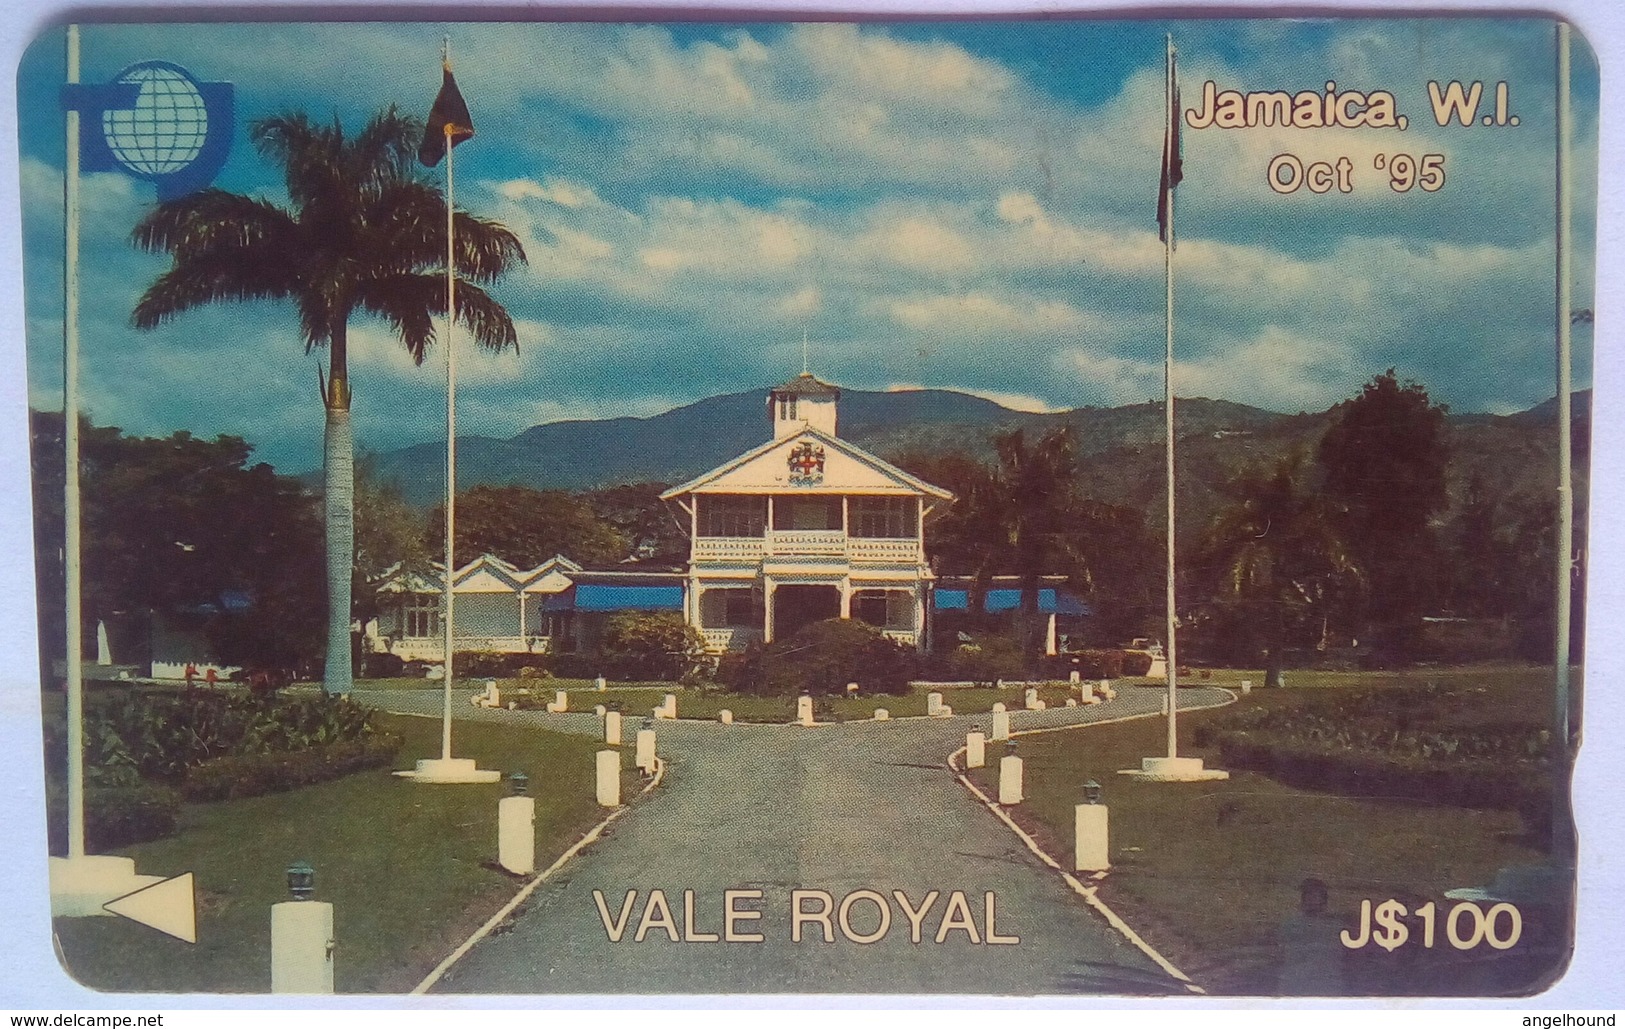 Jamaica  J$100  74JAMA " Vale Royal - October '95 " - Jamaica